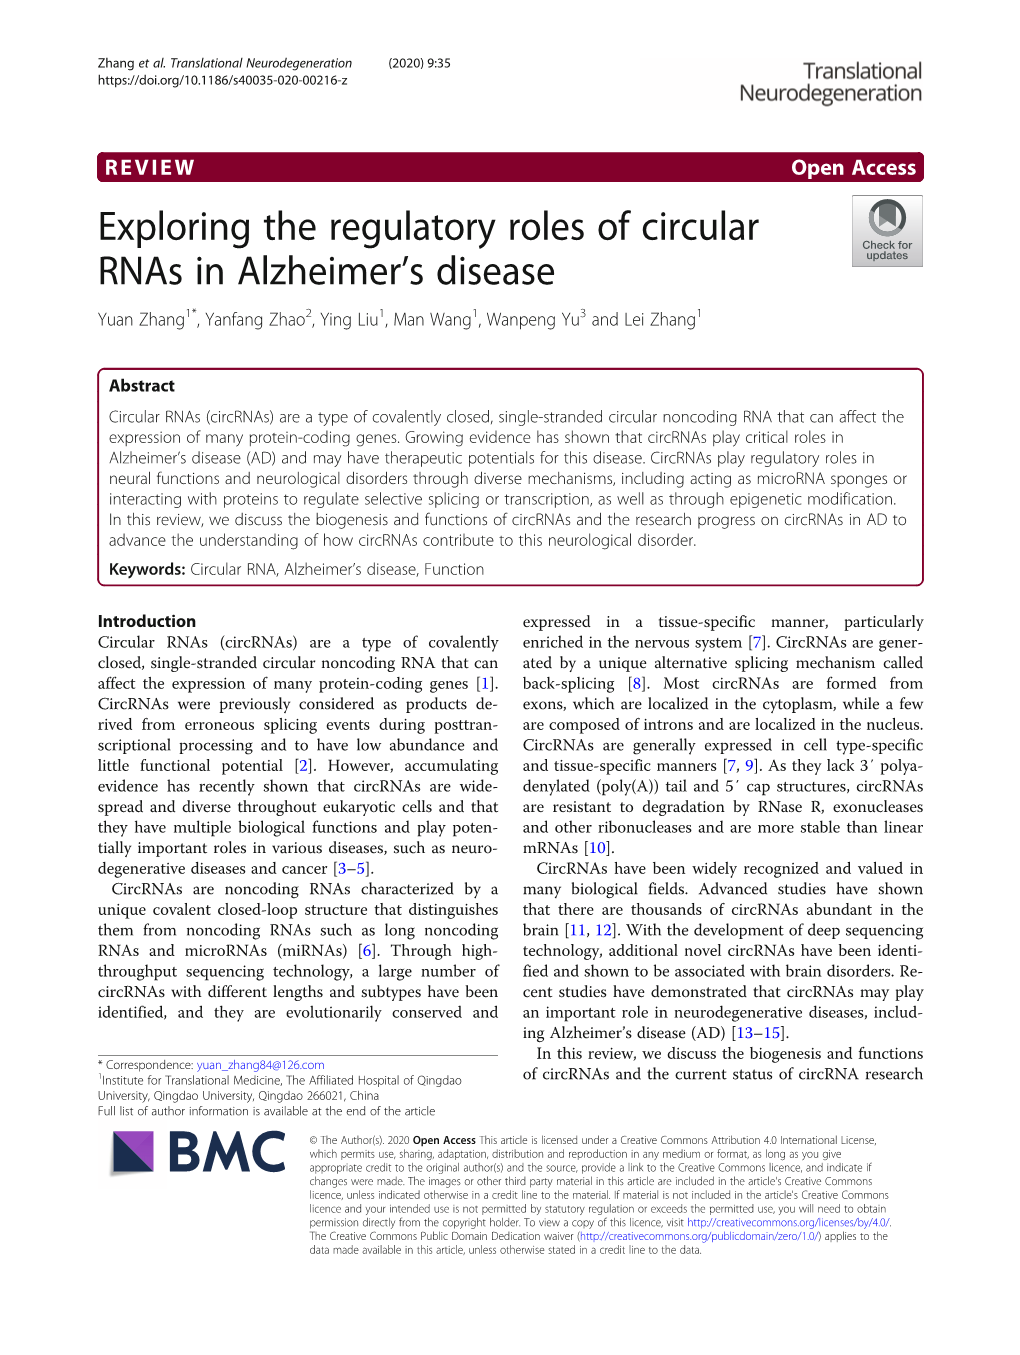 Exploring the Regulatory Roles of Circular Rnas in Alzheimer's Disease